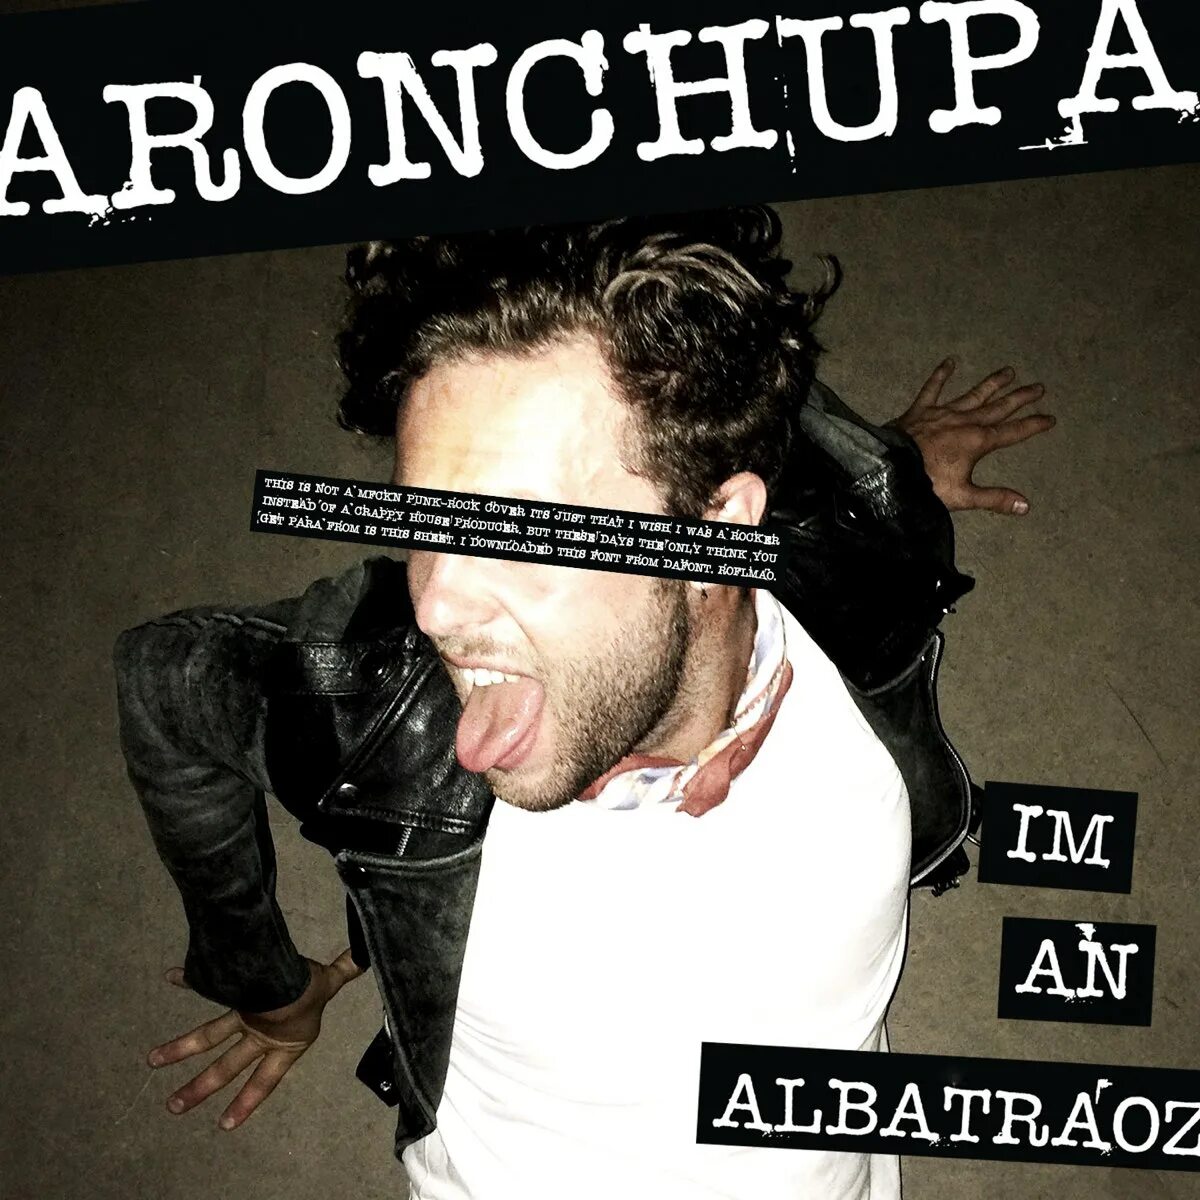 Albatraoz группа. I'M am Albatros Aron chupa.